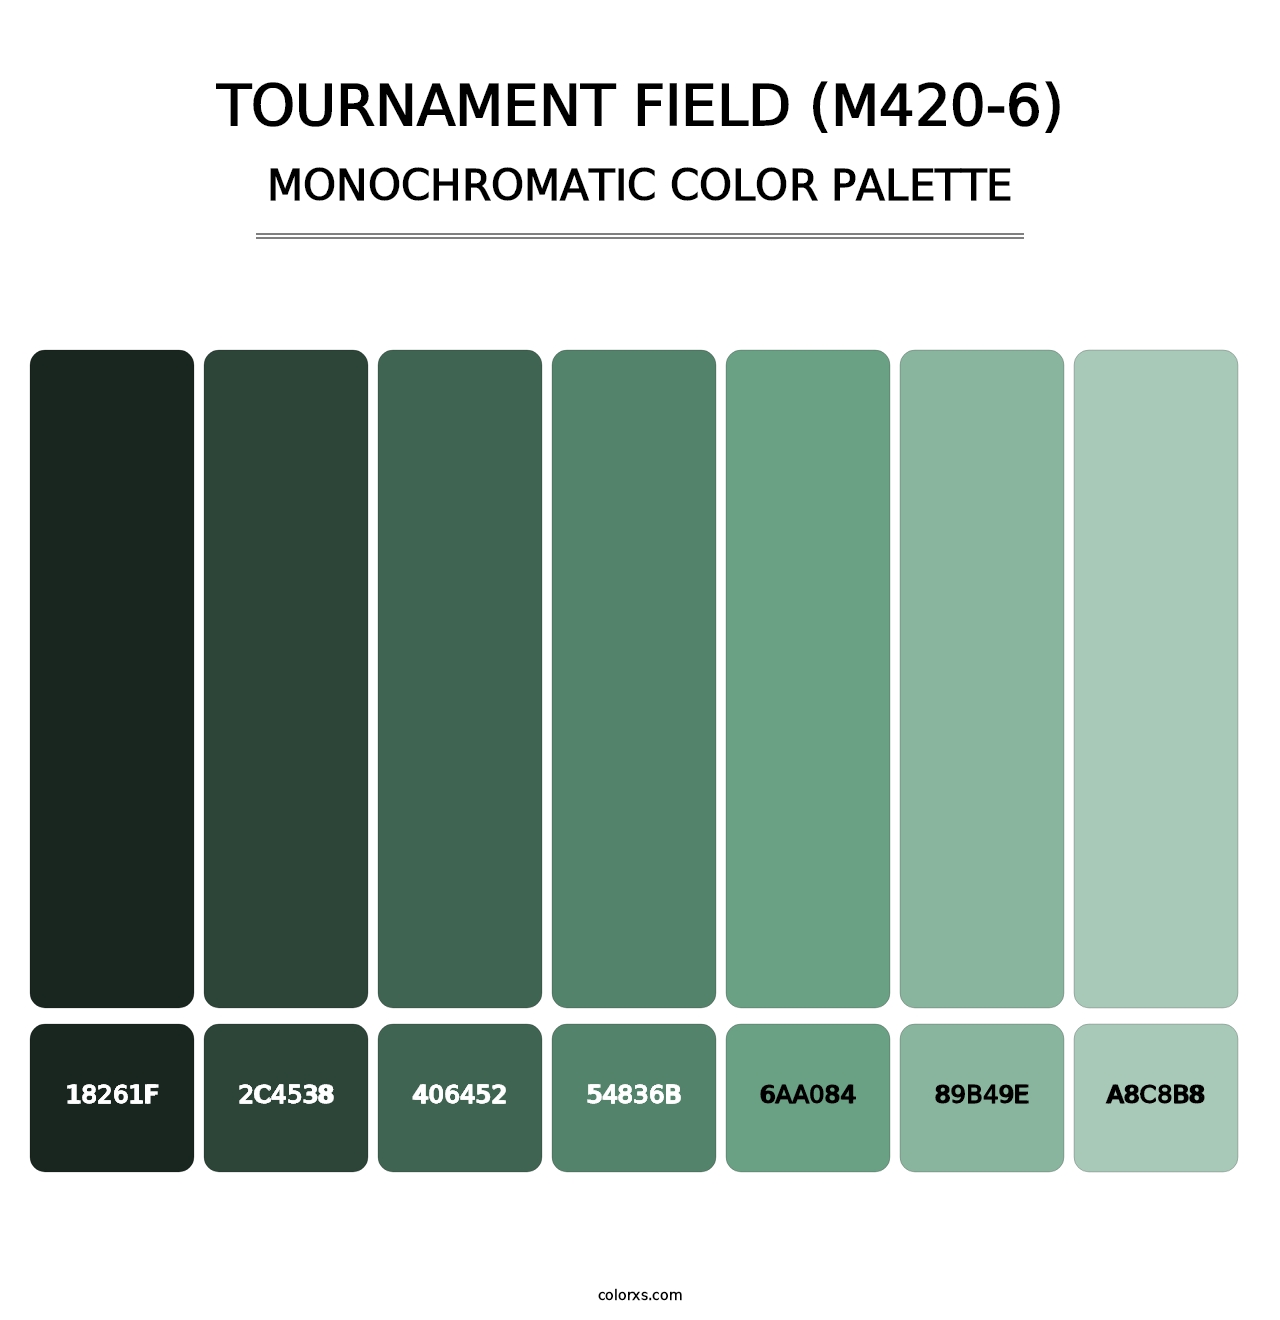 Tournament Field (M420-6) - Monochromatic Color Palette